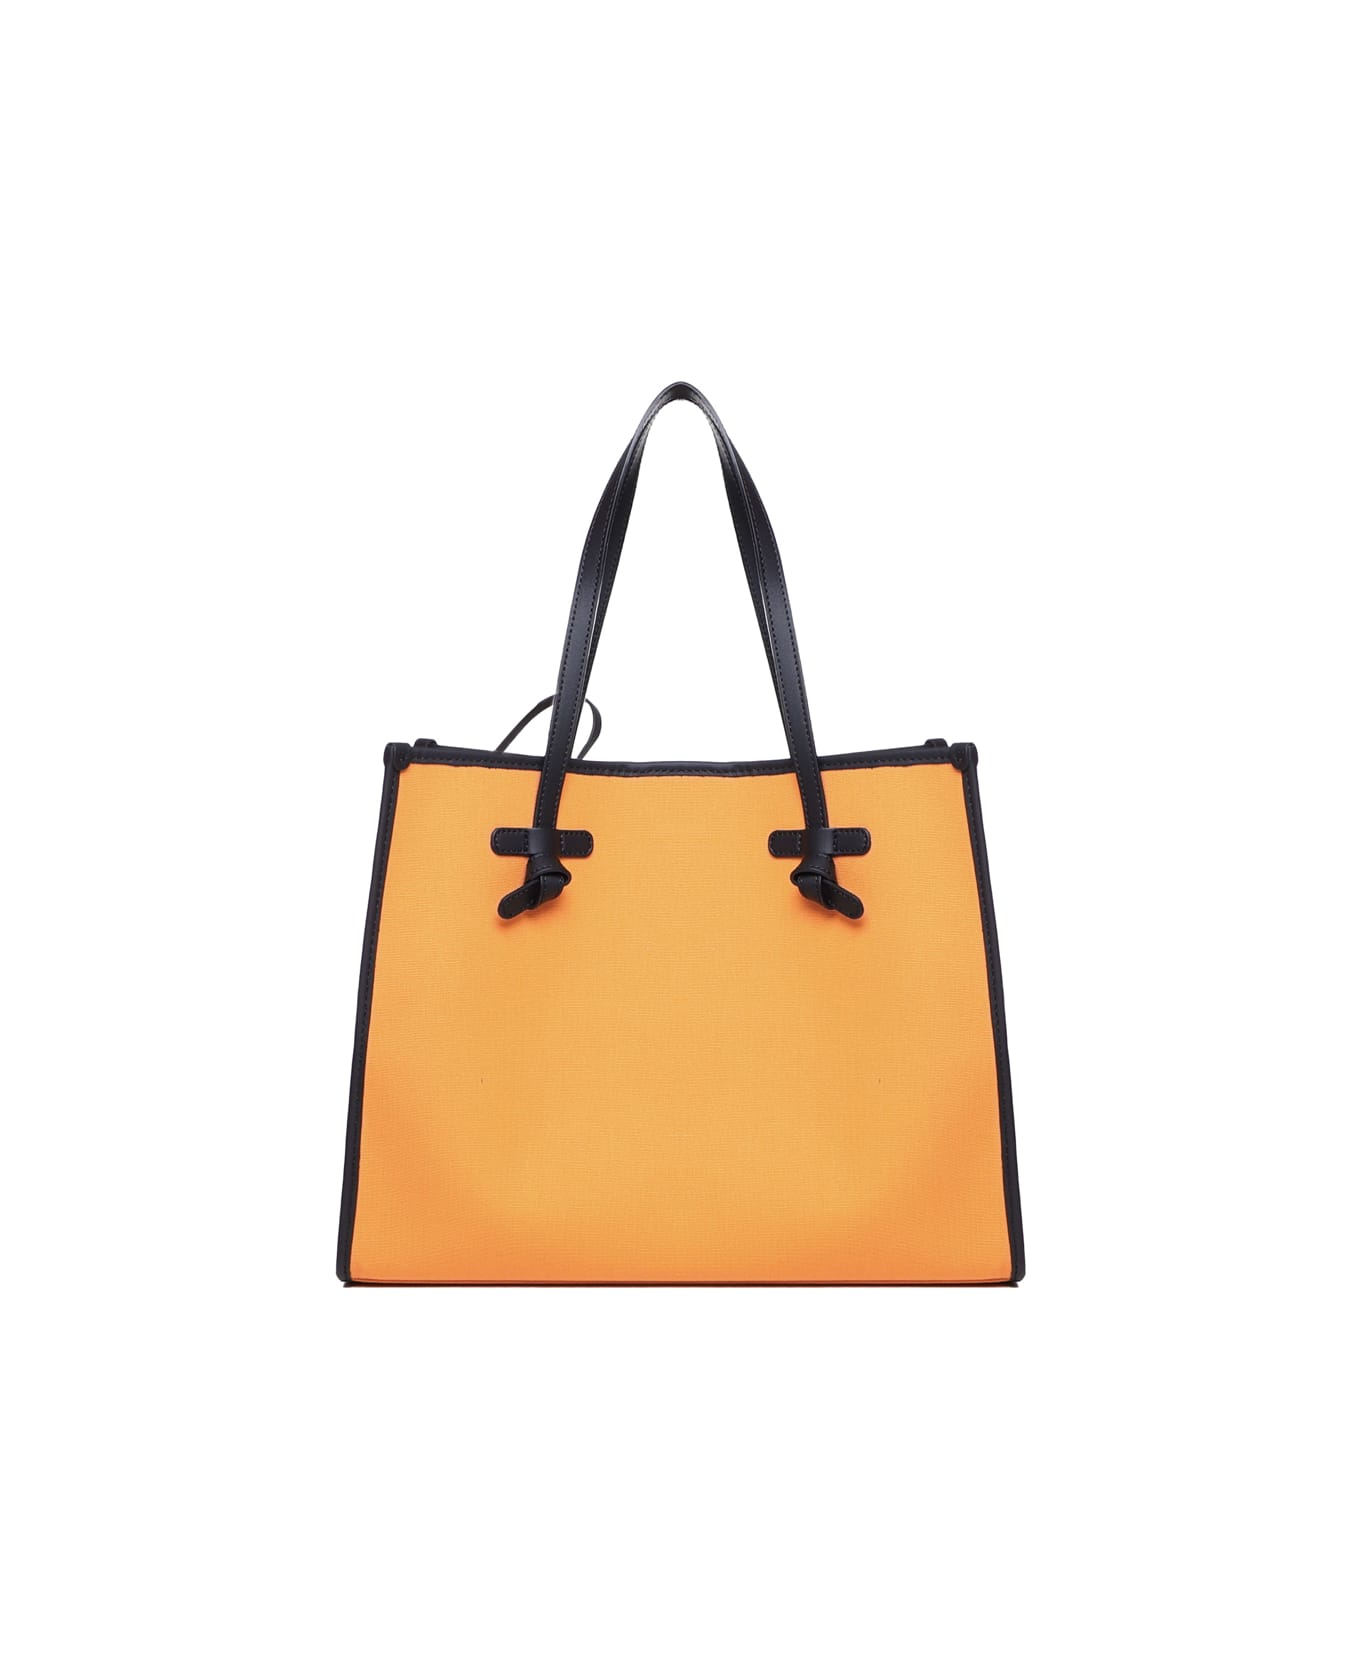 Gianni Chiarini Marcella Shopping Bag - Orange